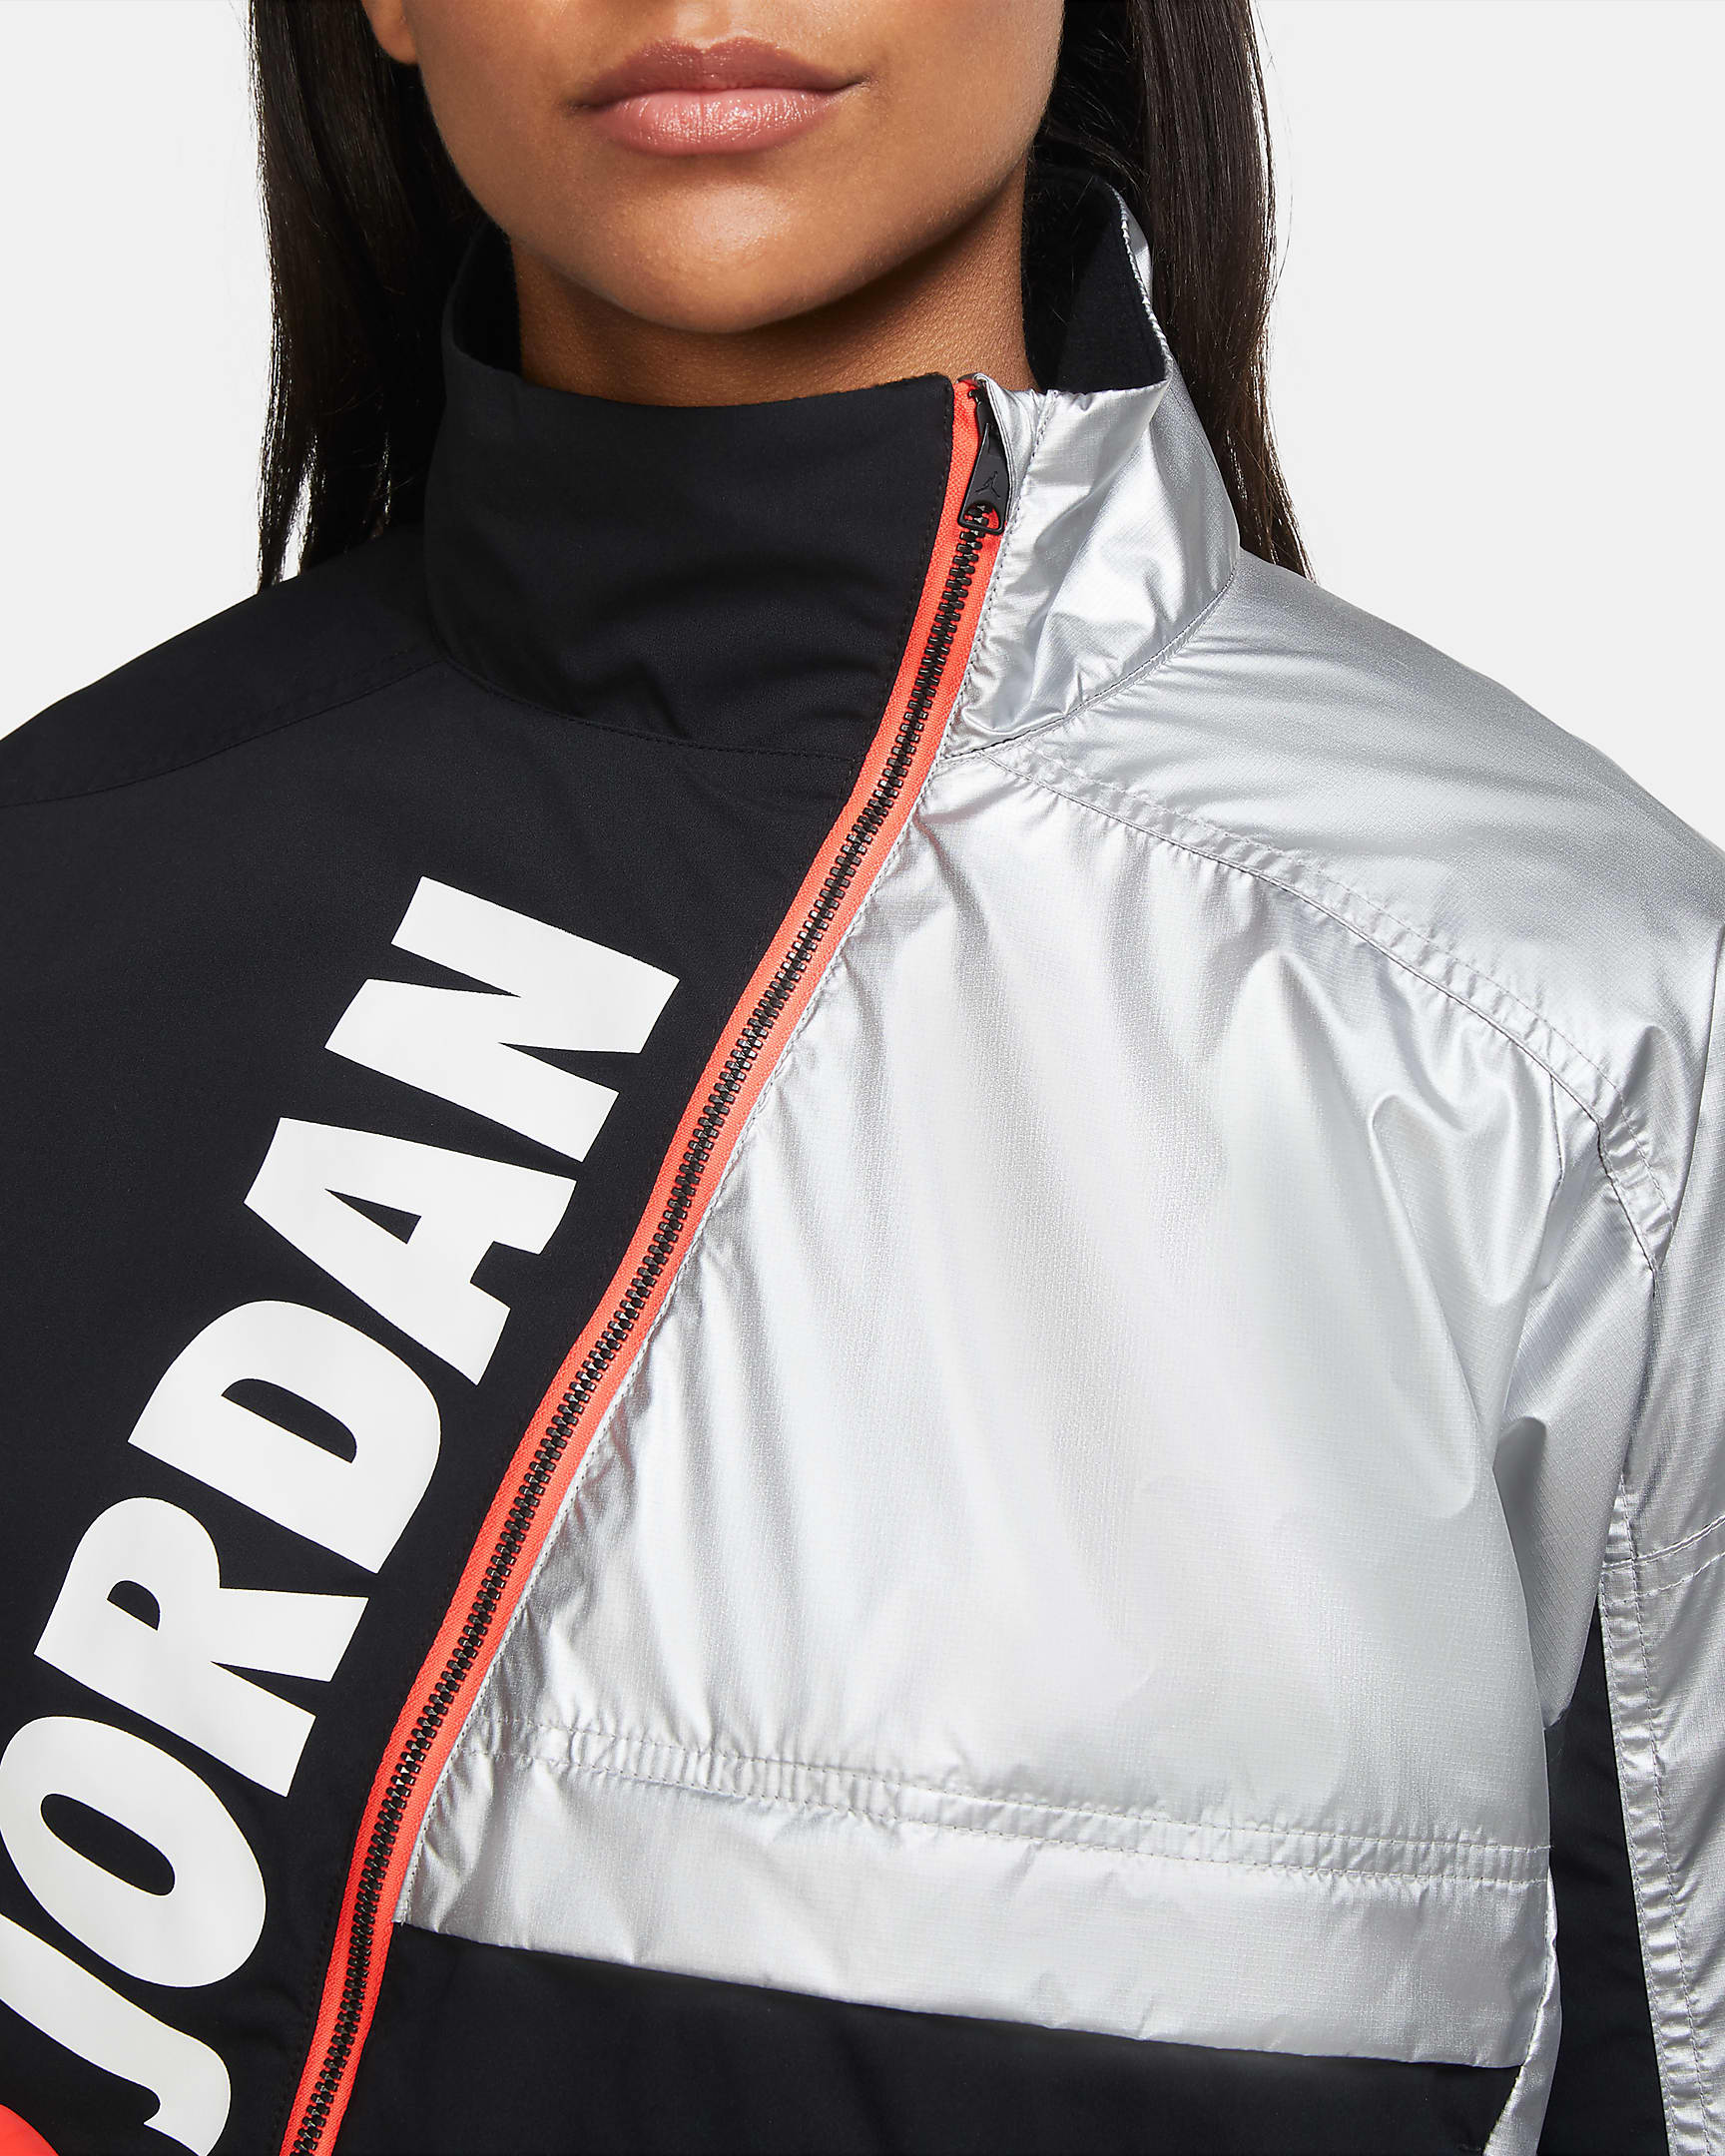 jordan-winter-utility-womens-jacket-2mBZr7-1